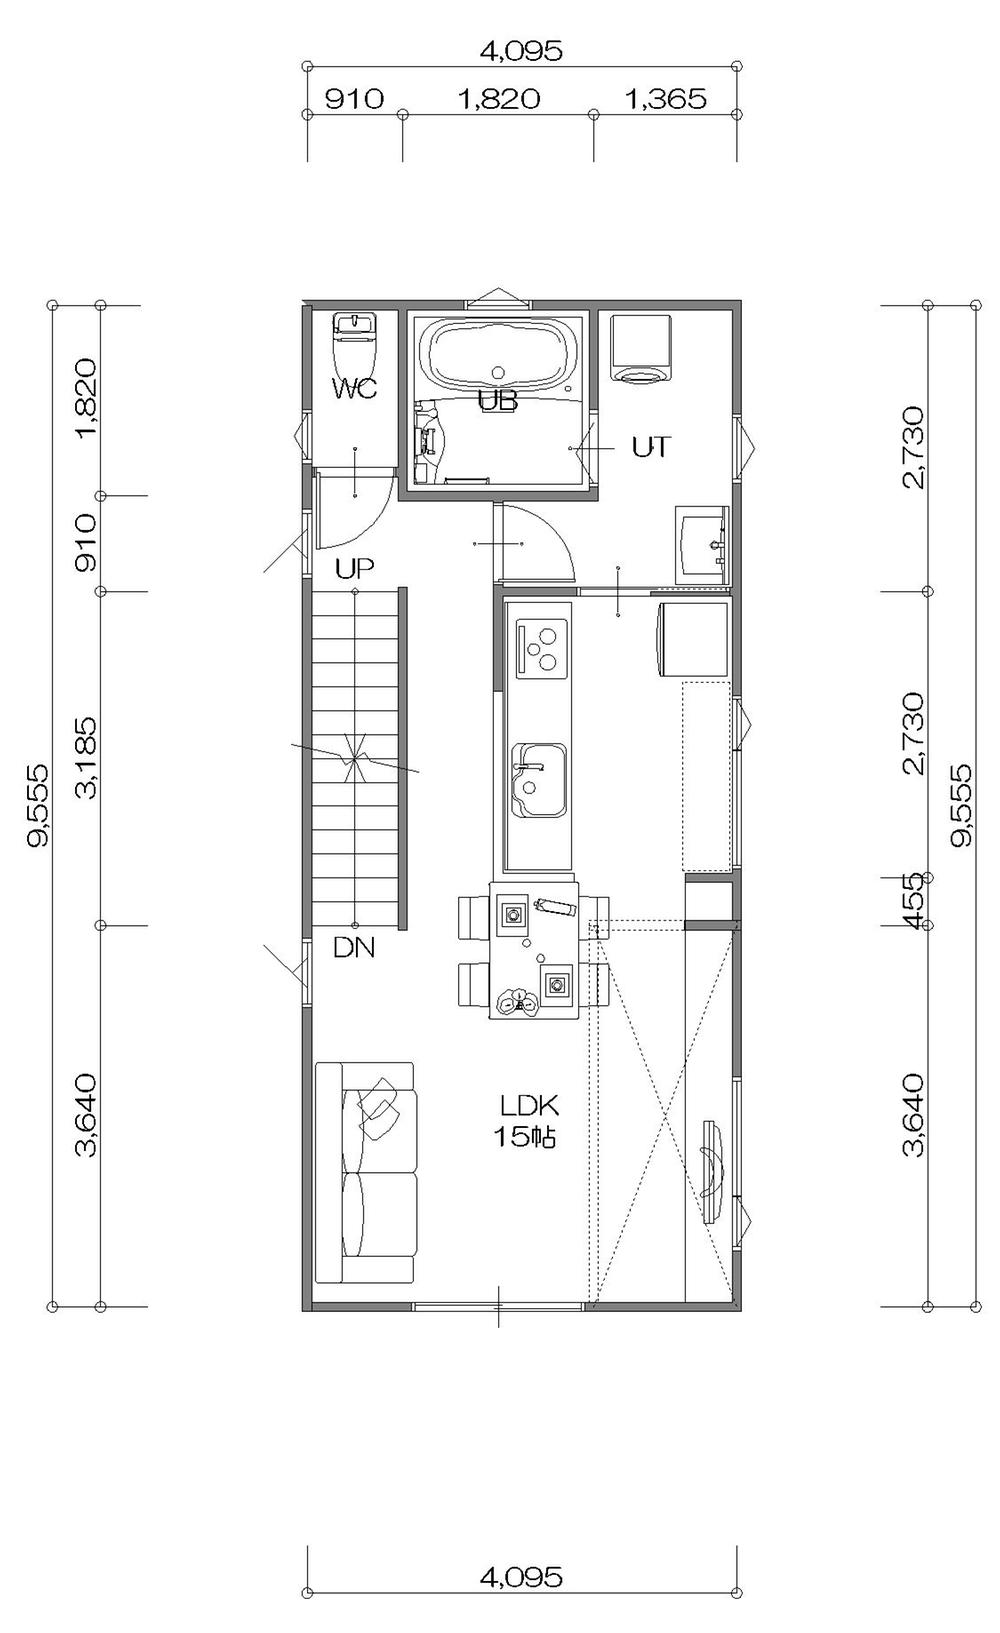 Building plan example (floor plan). 2F plan view 11.81 square meters